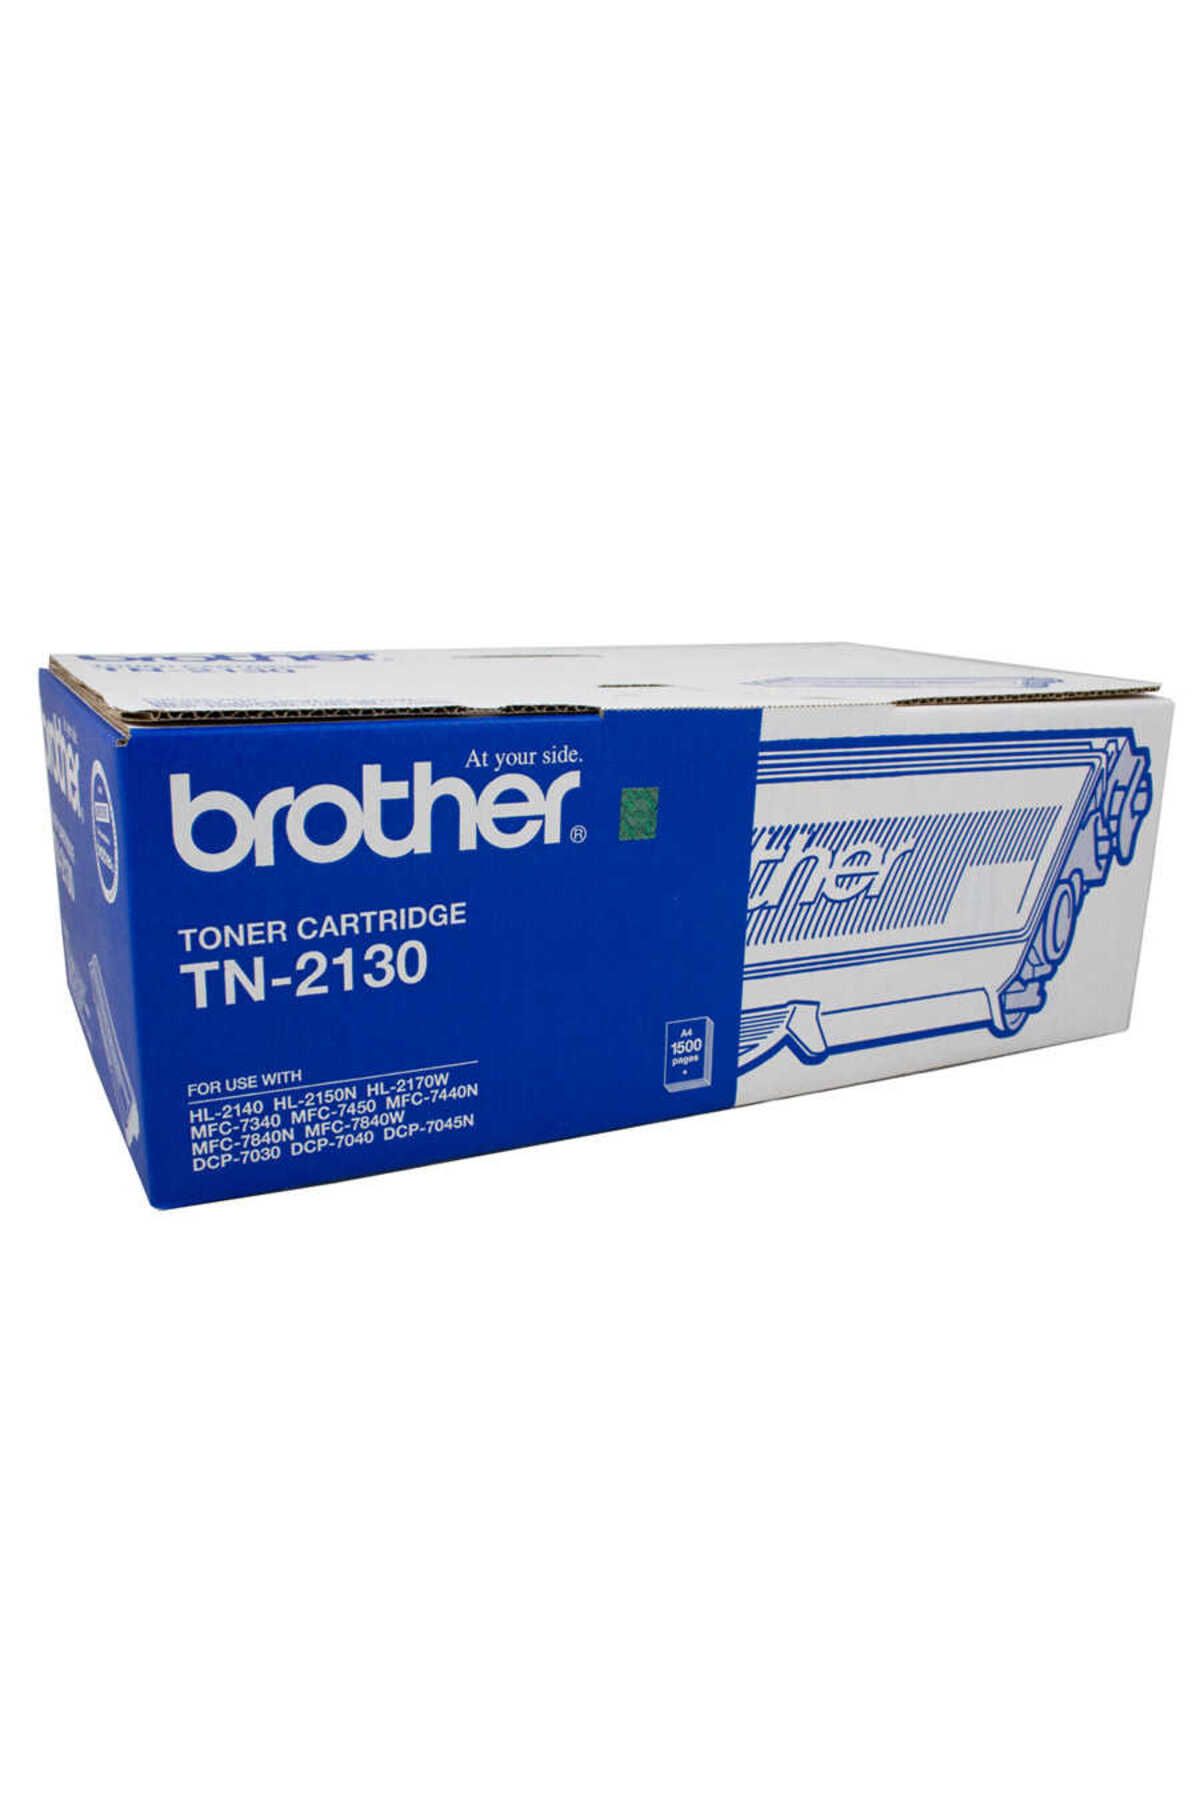 Brother Tn-2130 Toner